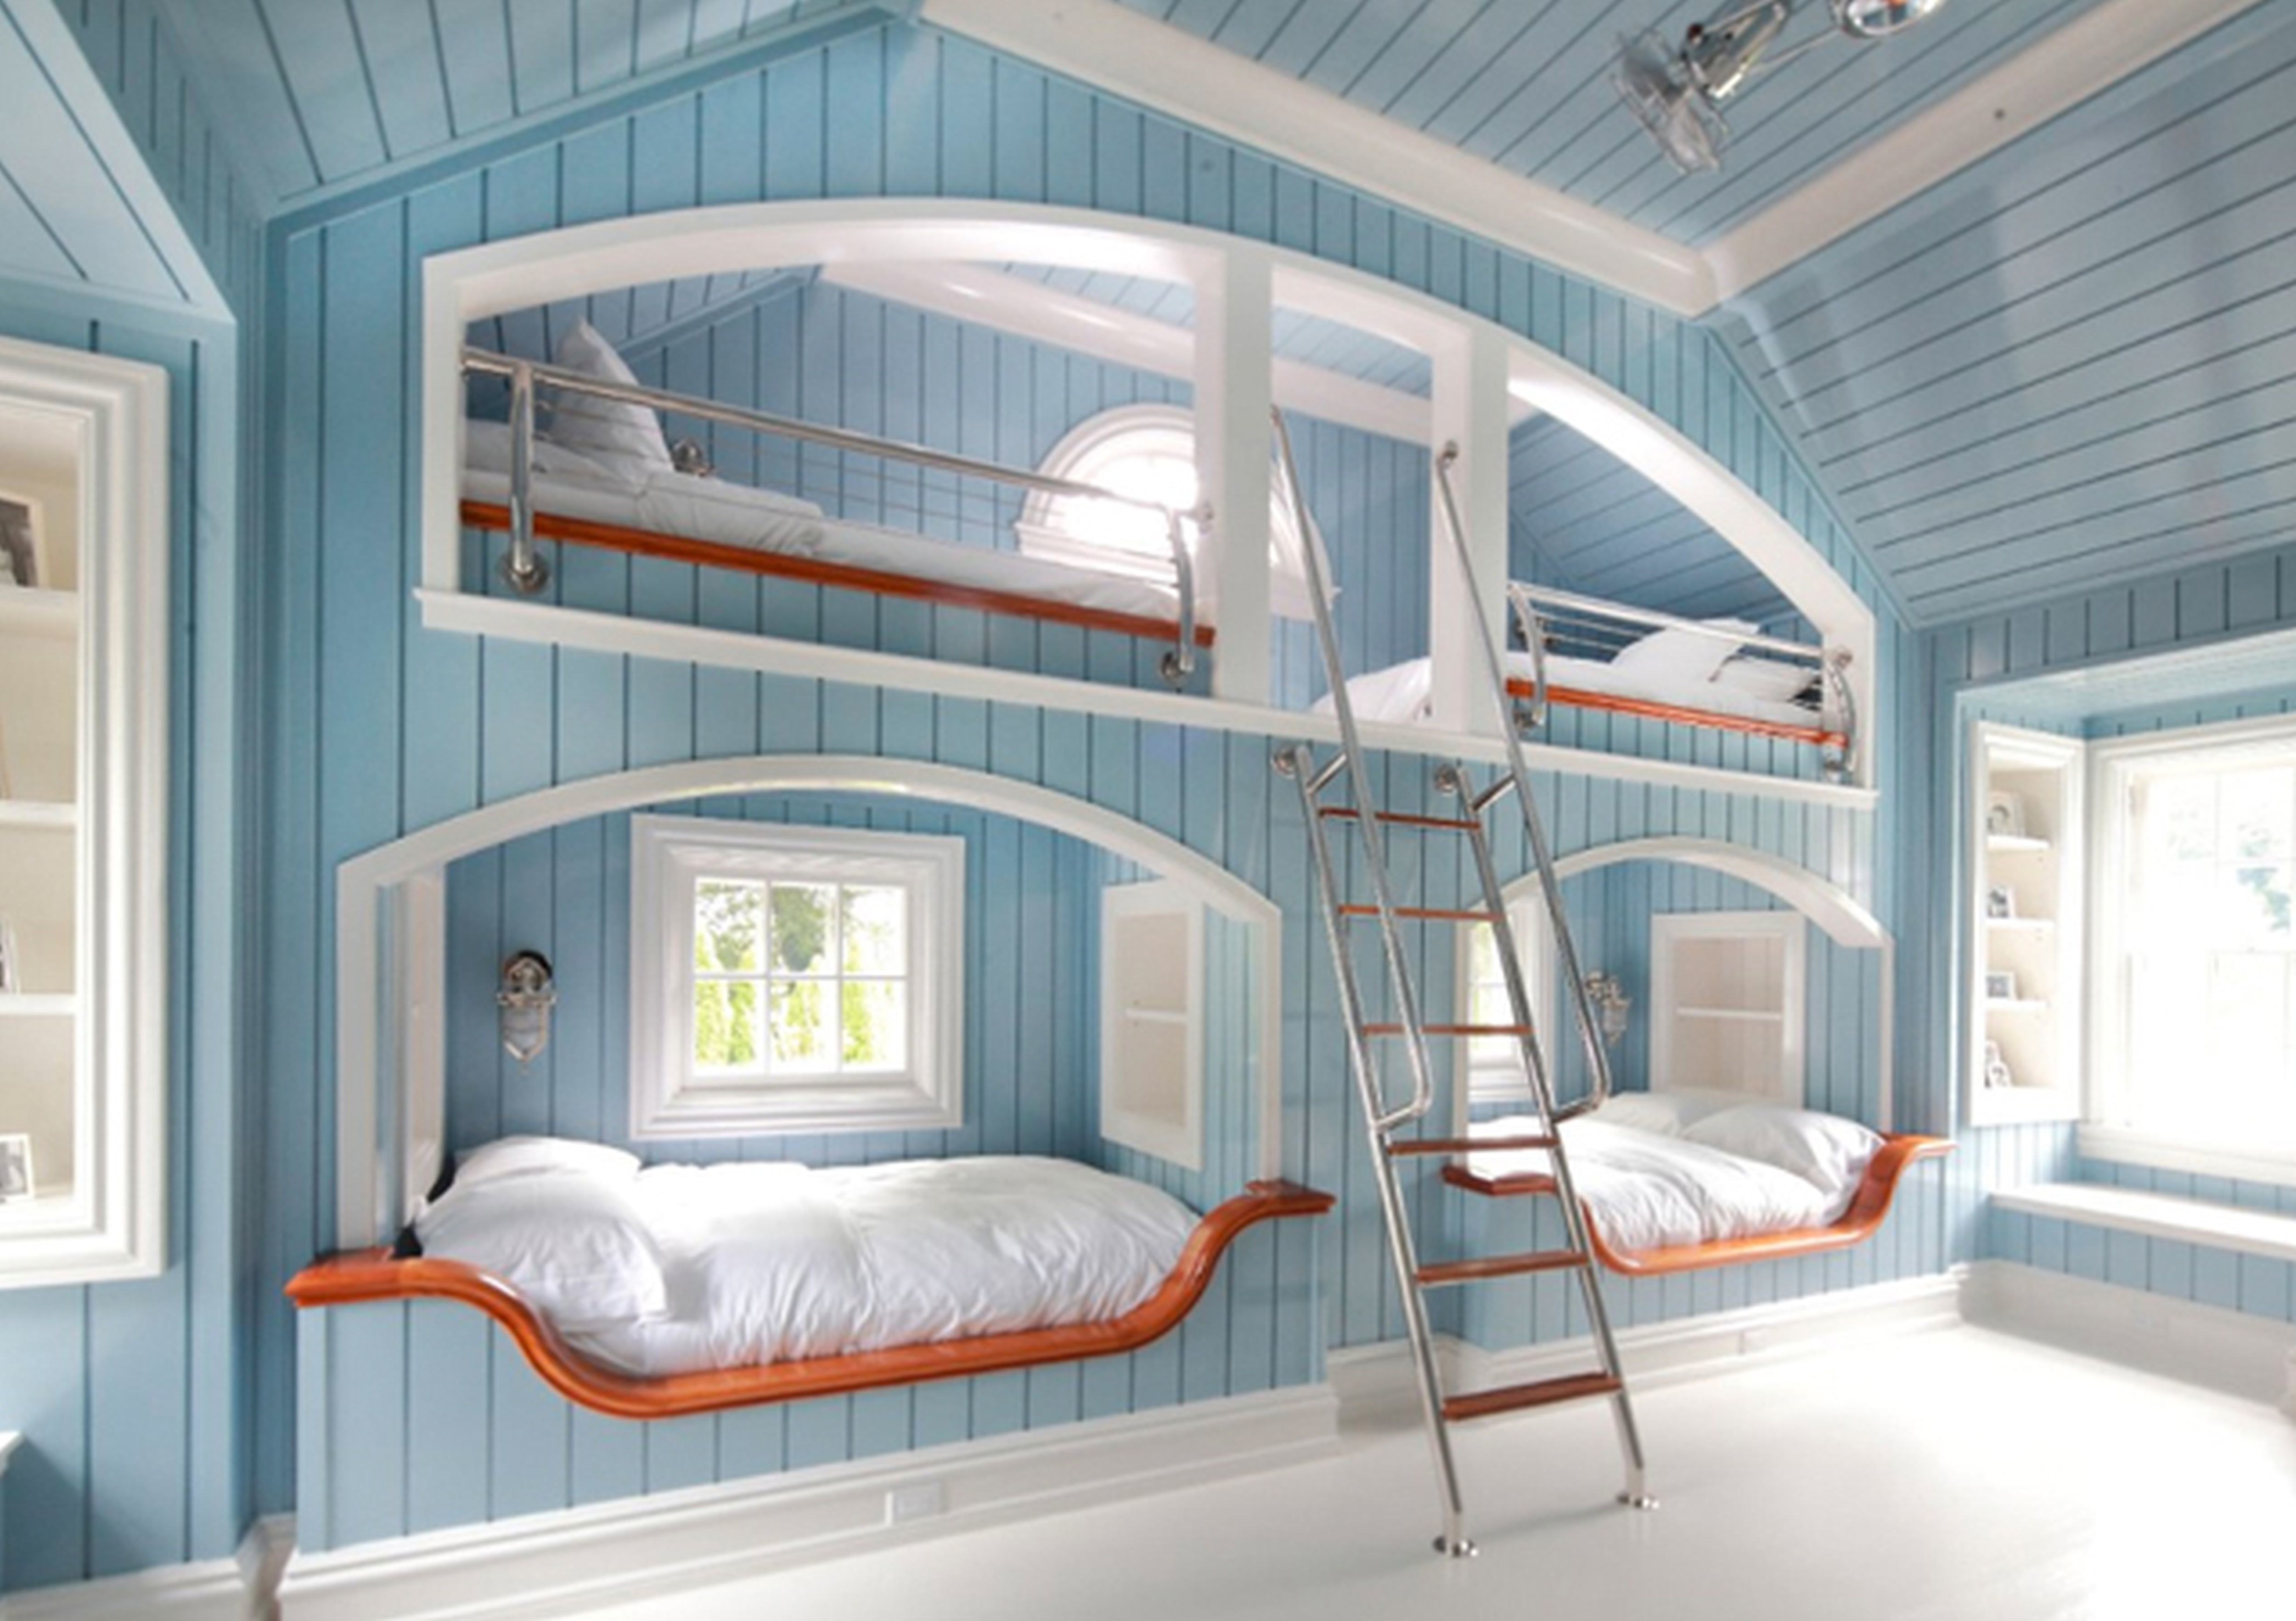 Брат мой какой какая комната. Необычные двухъярусные кровати. Необычный интерьер комнаты. Необычные двухэтажные кровати. Необычные детские комнаты.